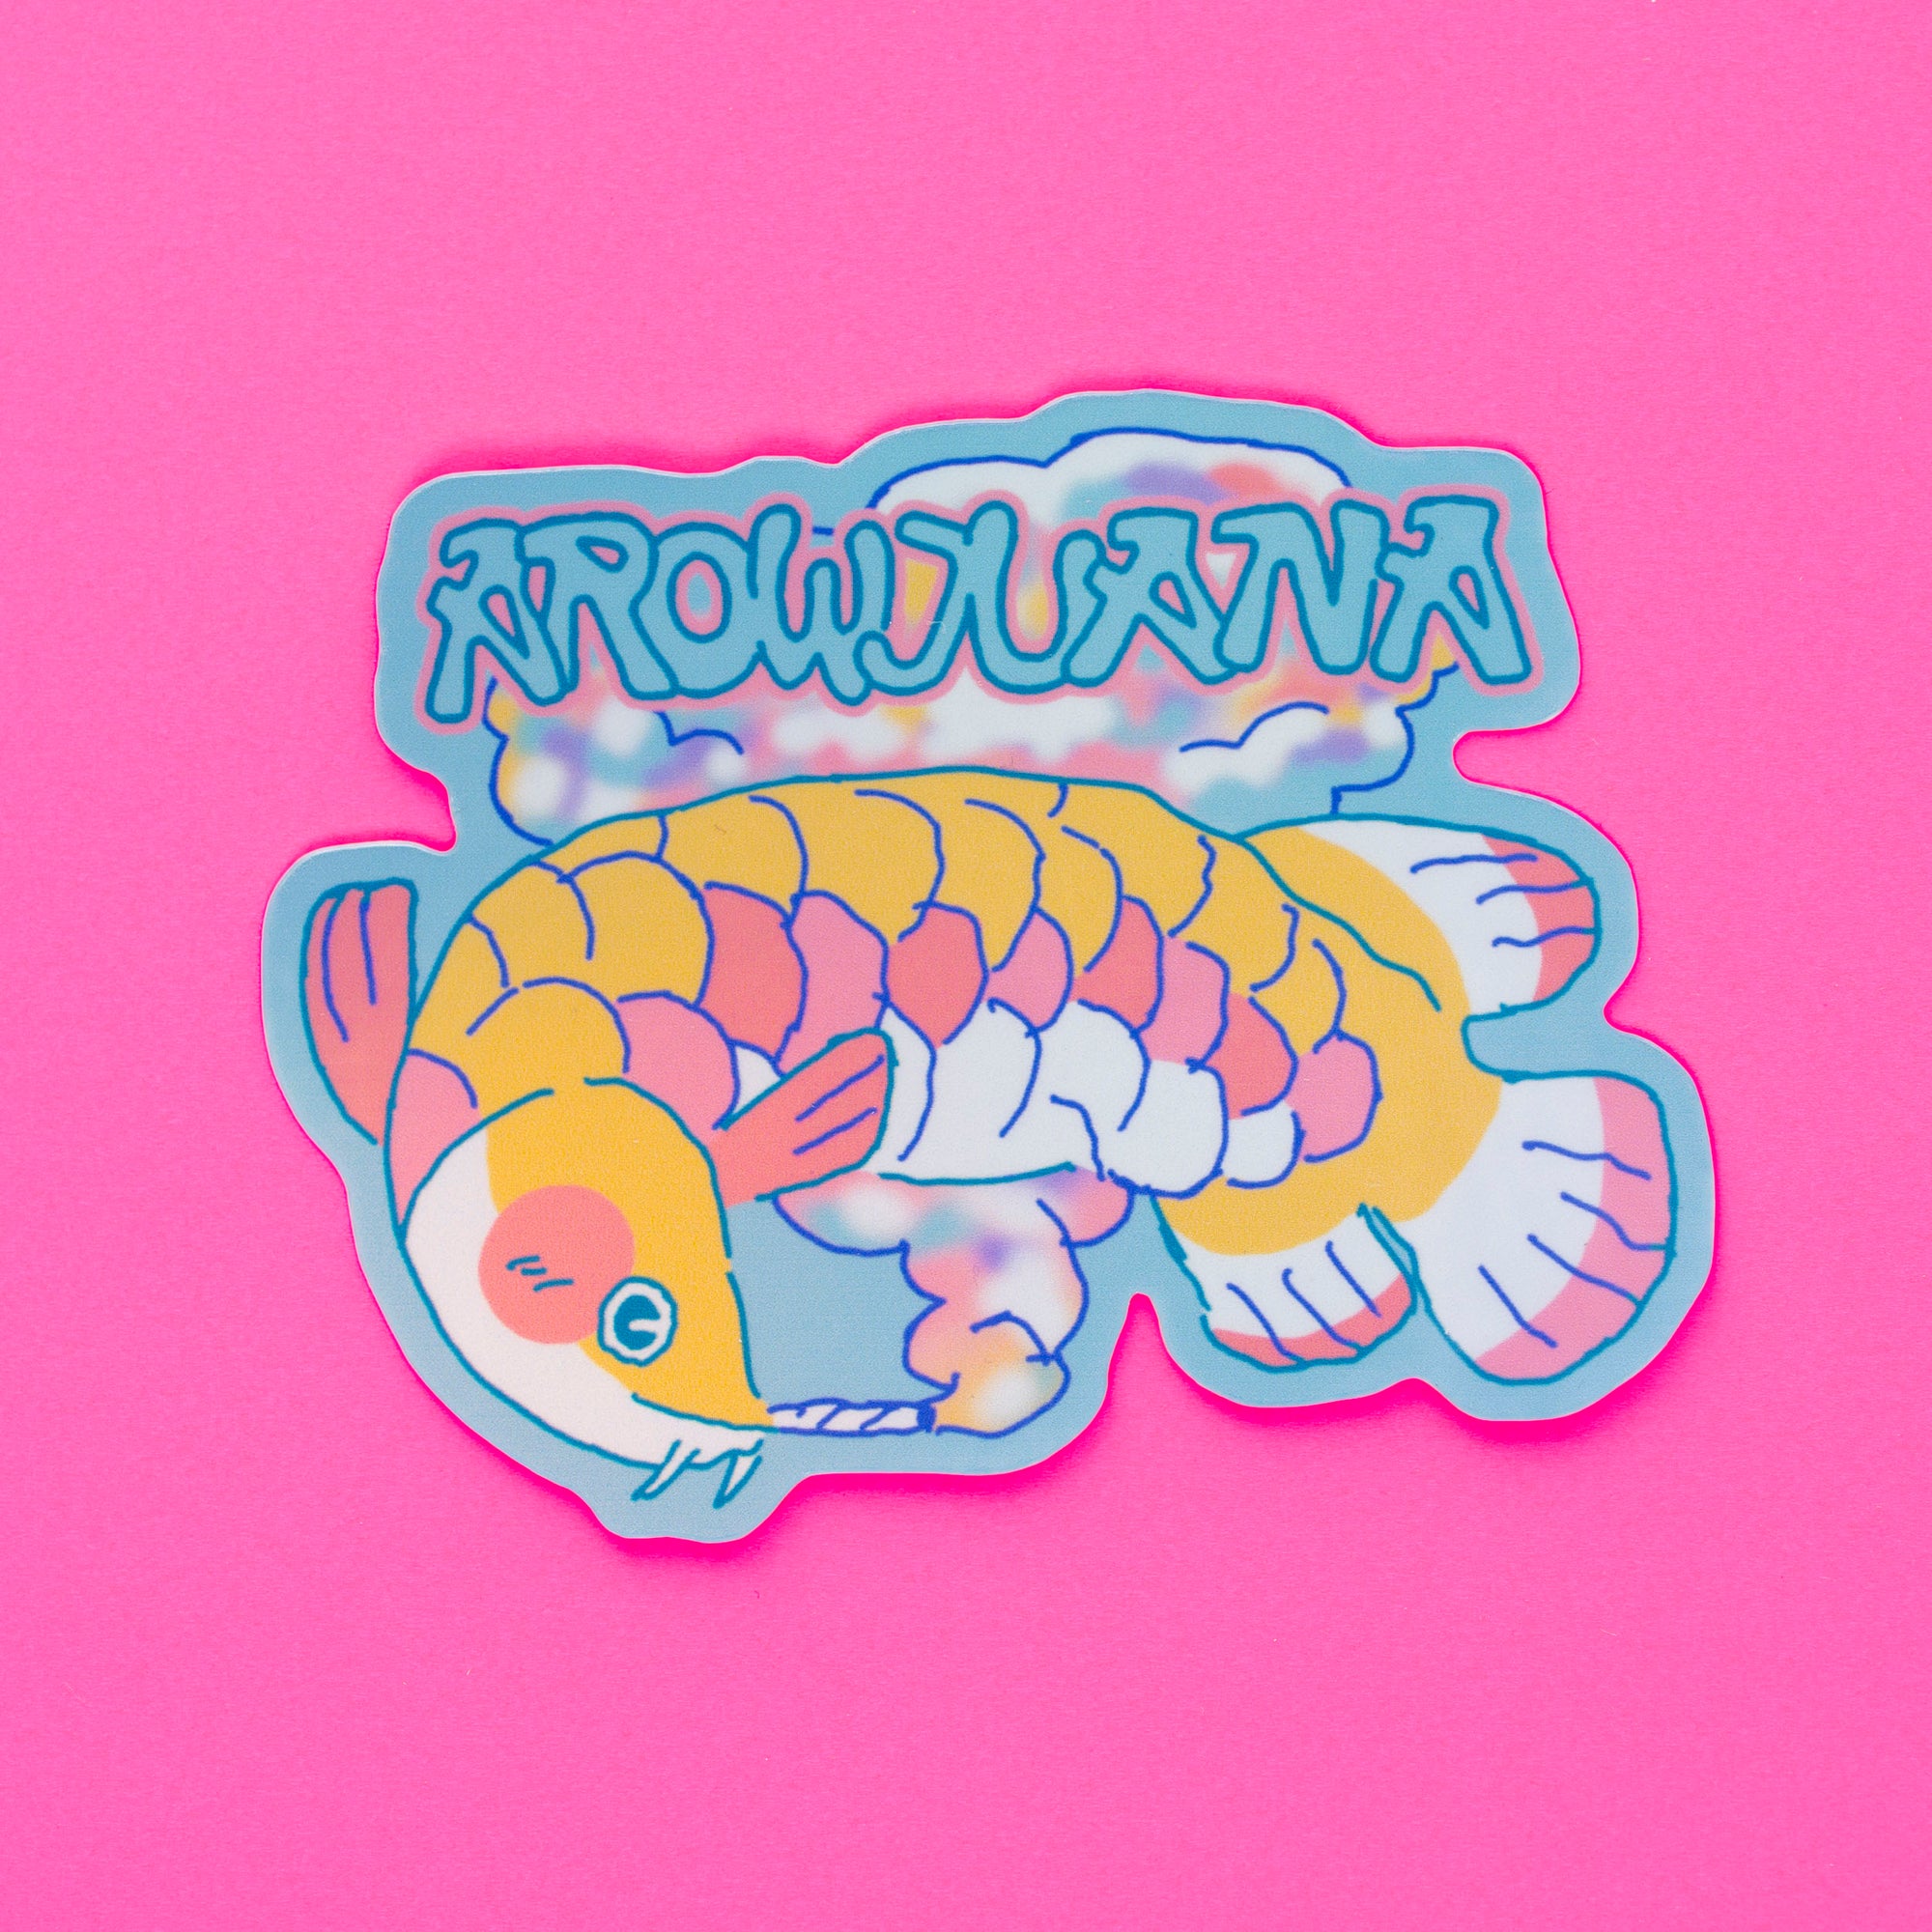 arowjuana holo sticker